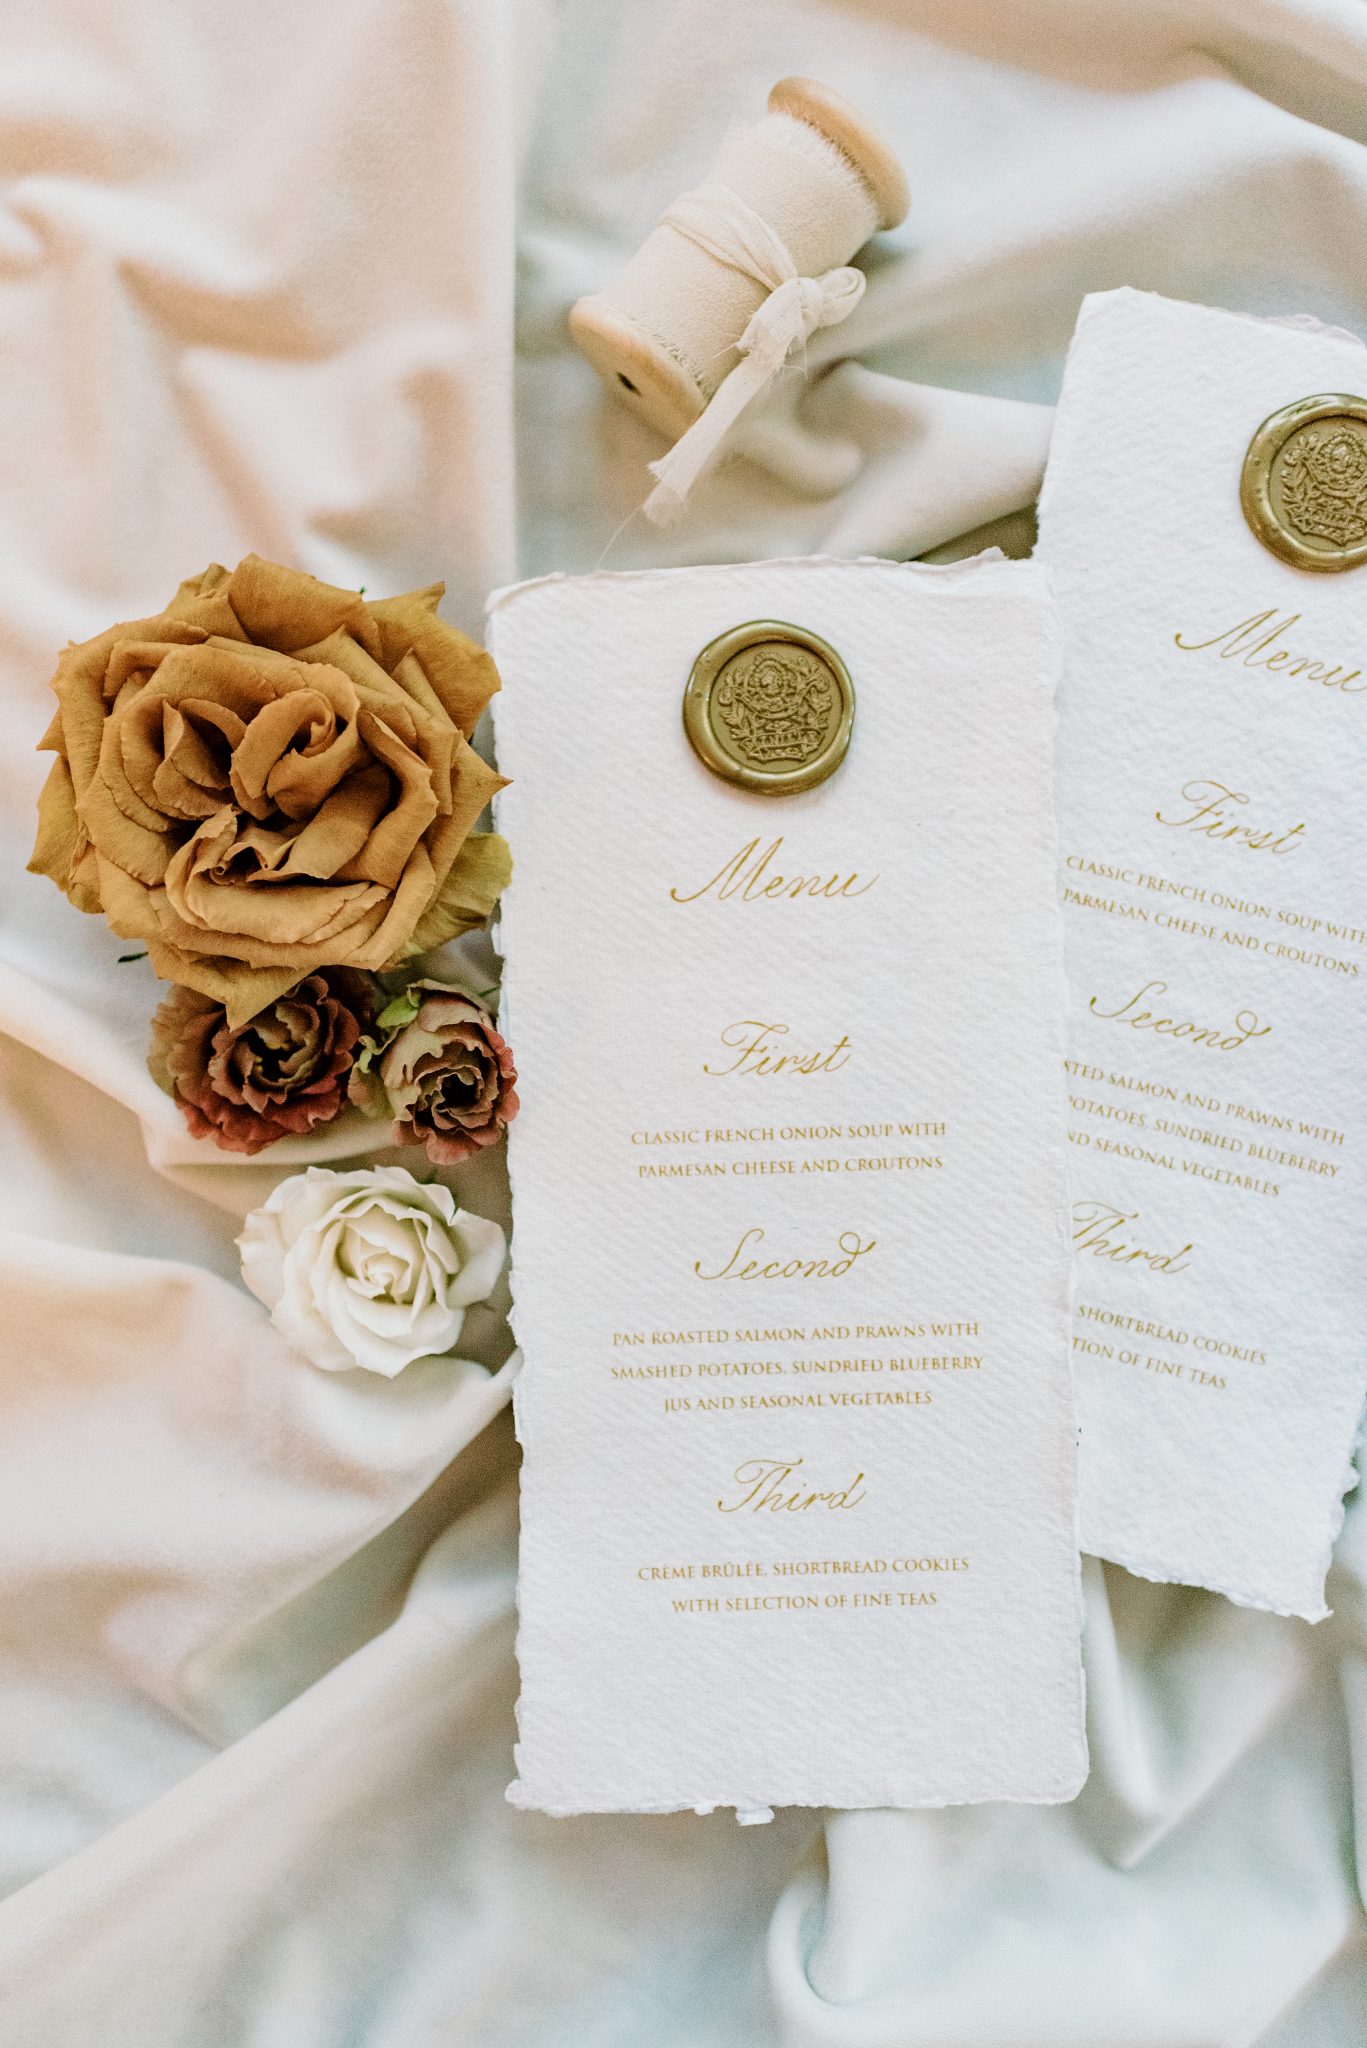 Enchanting wedding menus designed by Debbie Wong Designs